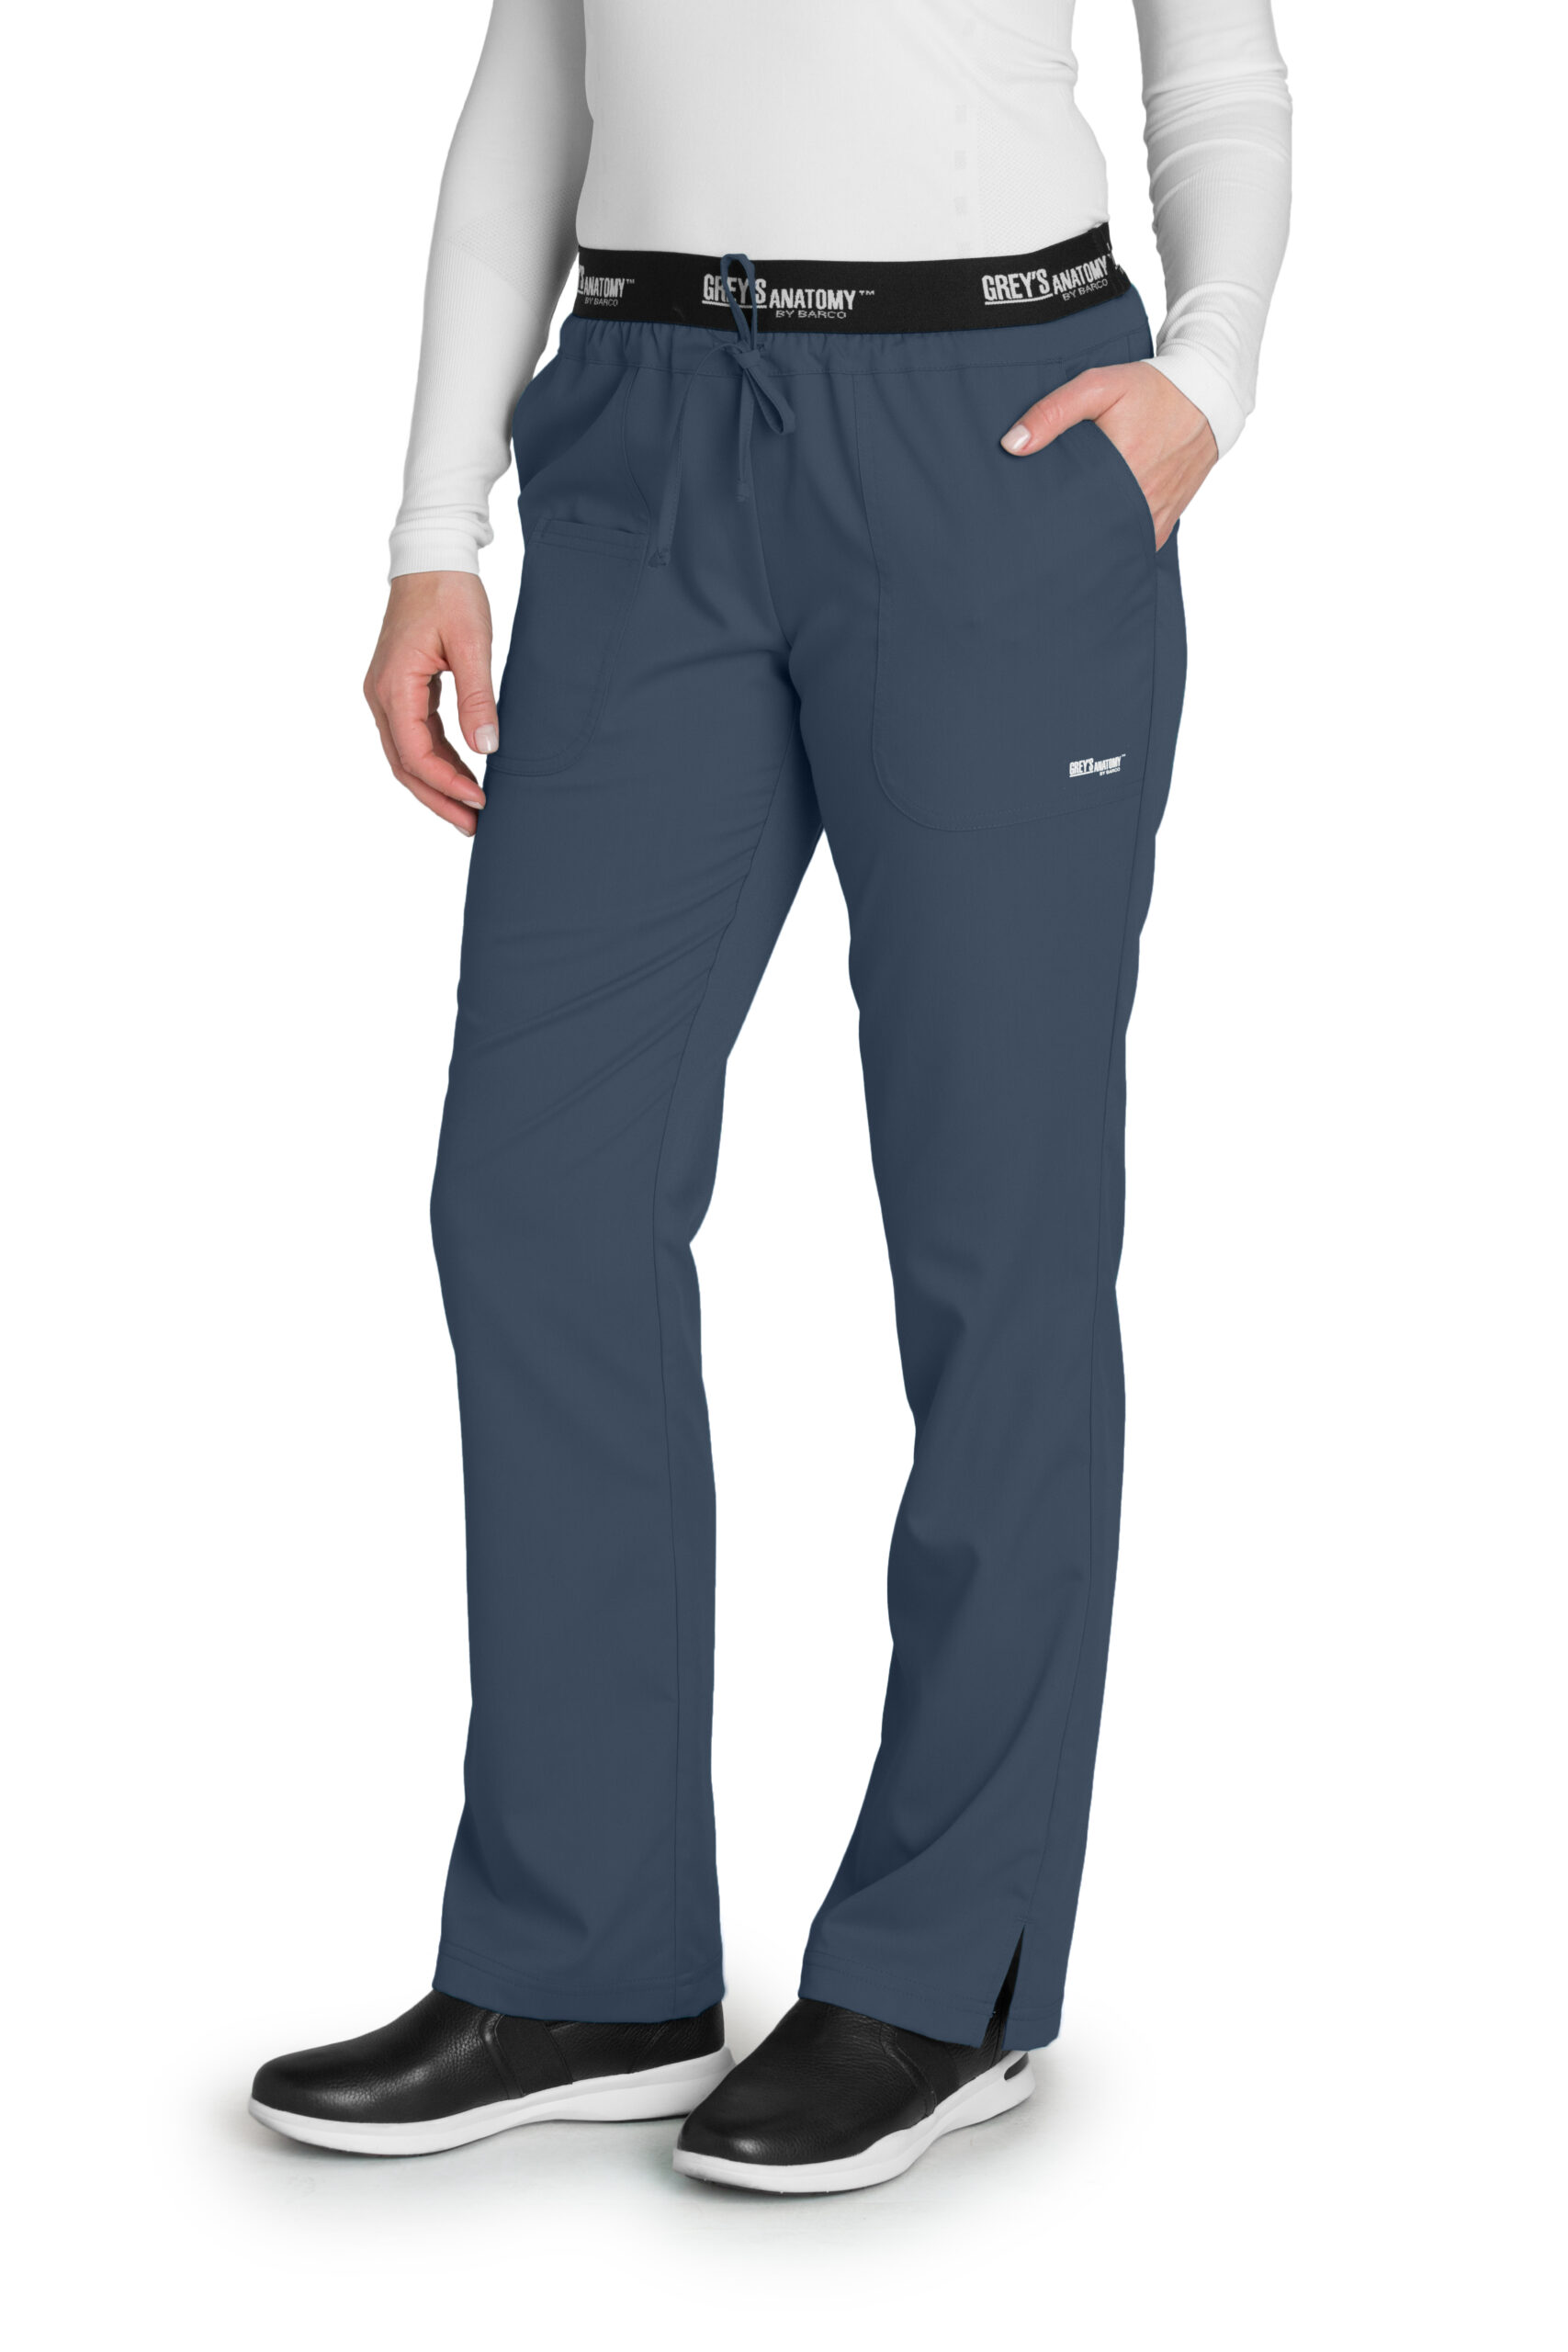 Grey's Anatomy Classic Aubrey Pant - 3 Pocket Scrub Pants in Steel